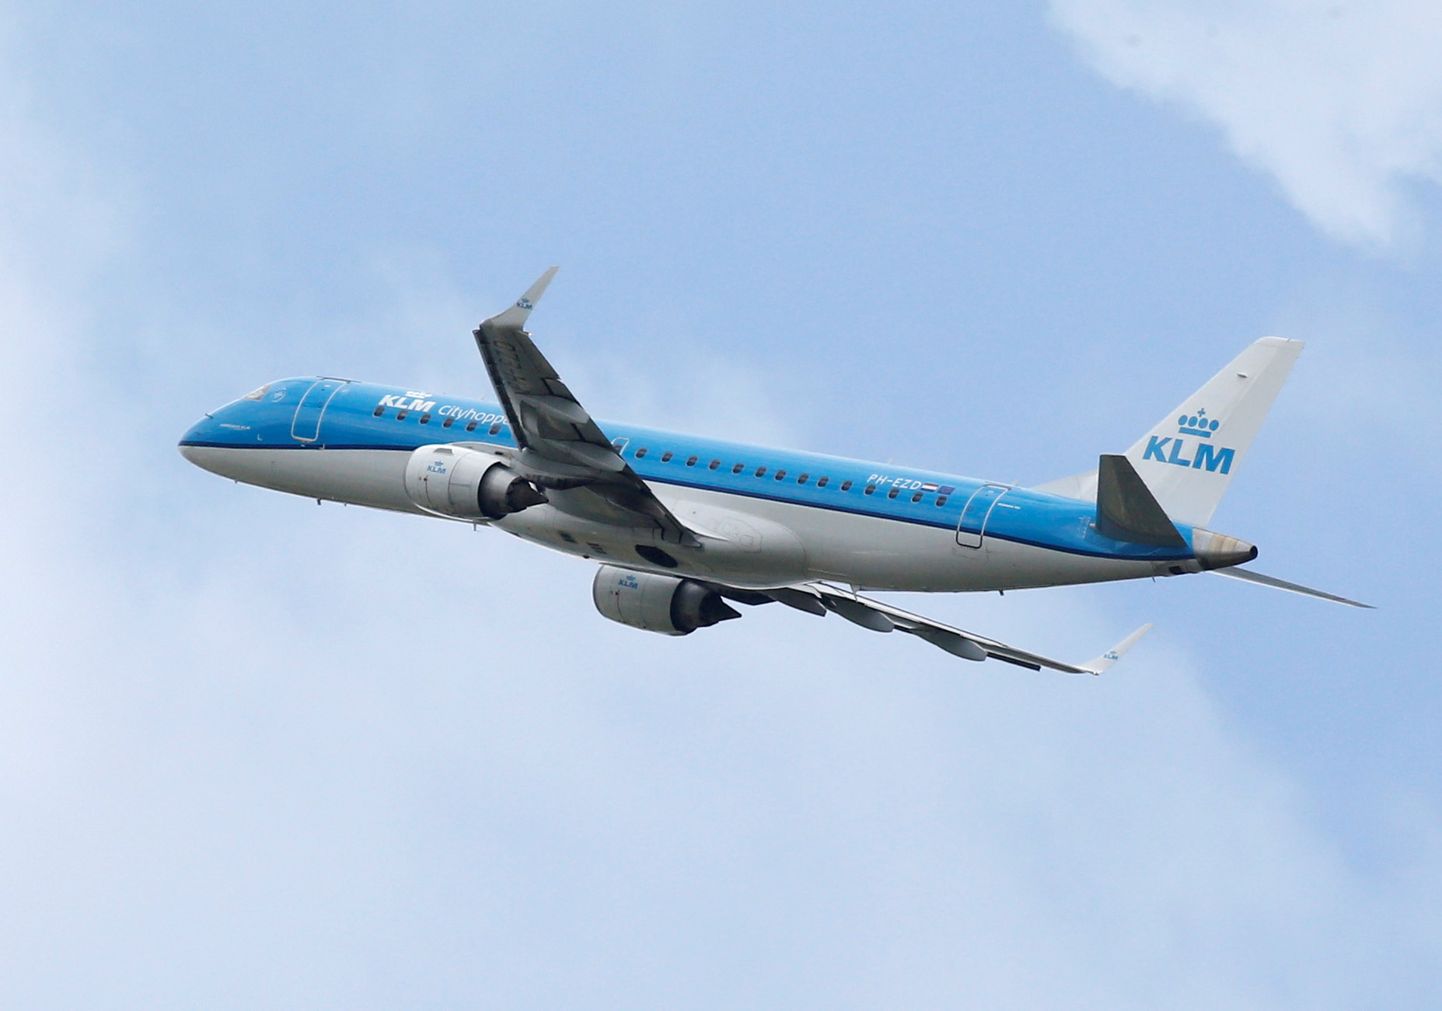 A KLM commercial passenger jet takes off in Blagnac near Toulouse, France, May 29, 2019. REUTERS/Regis Duvignau